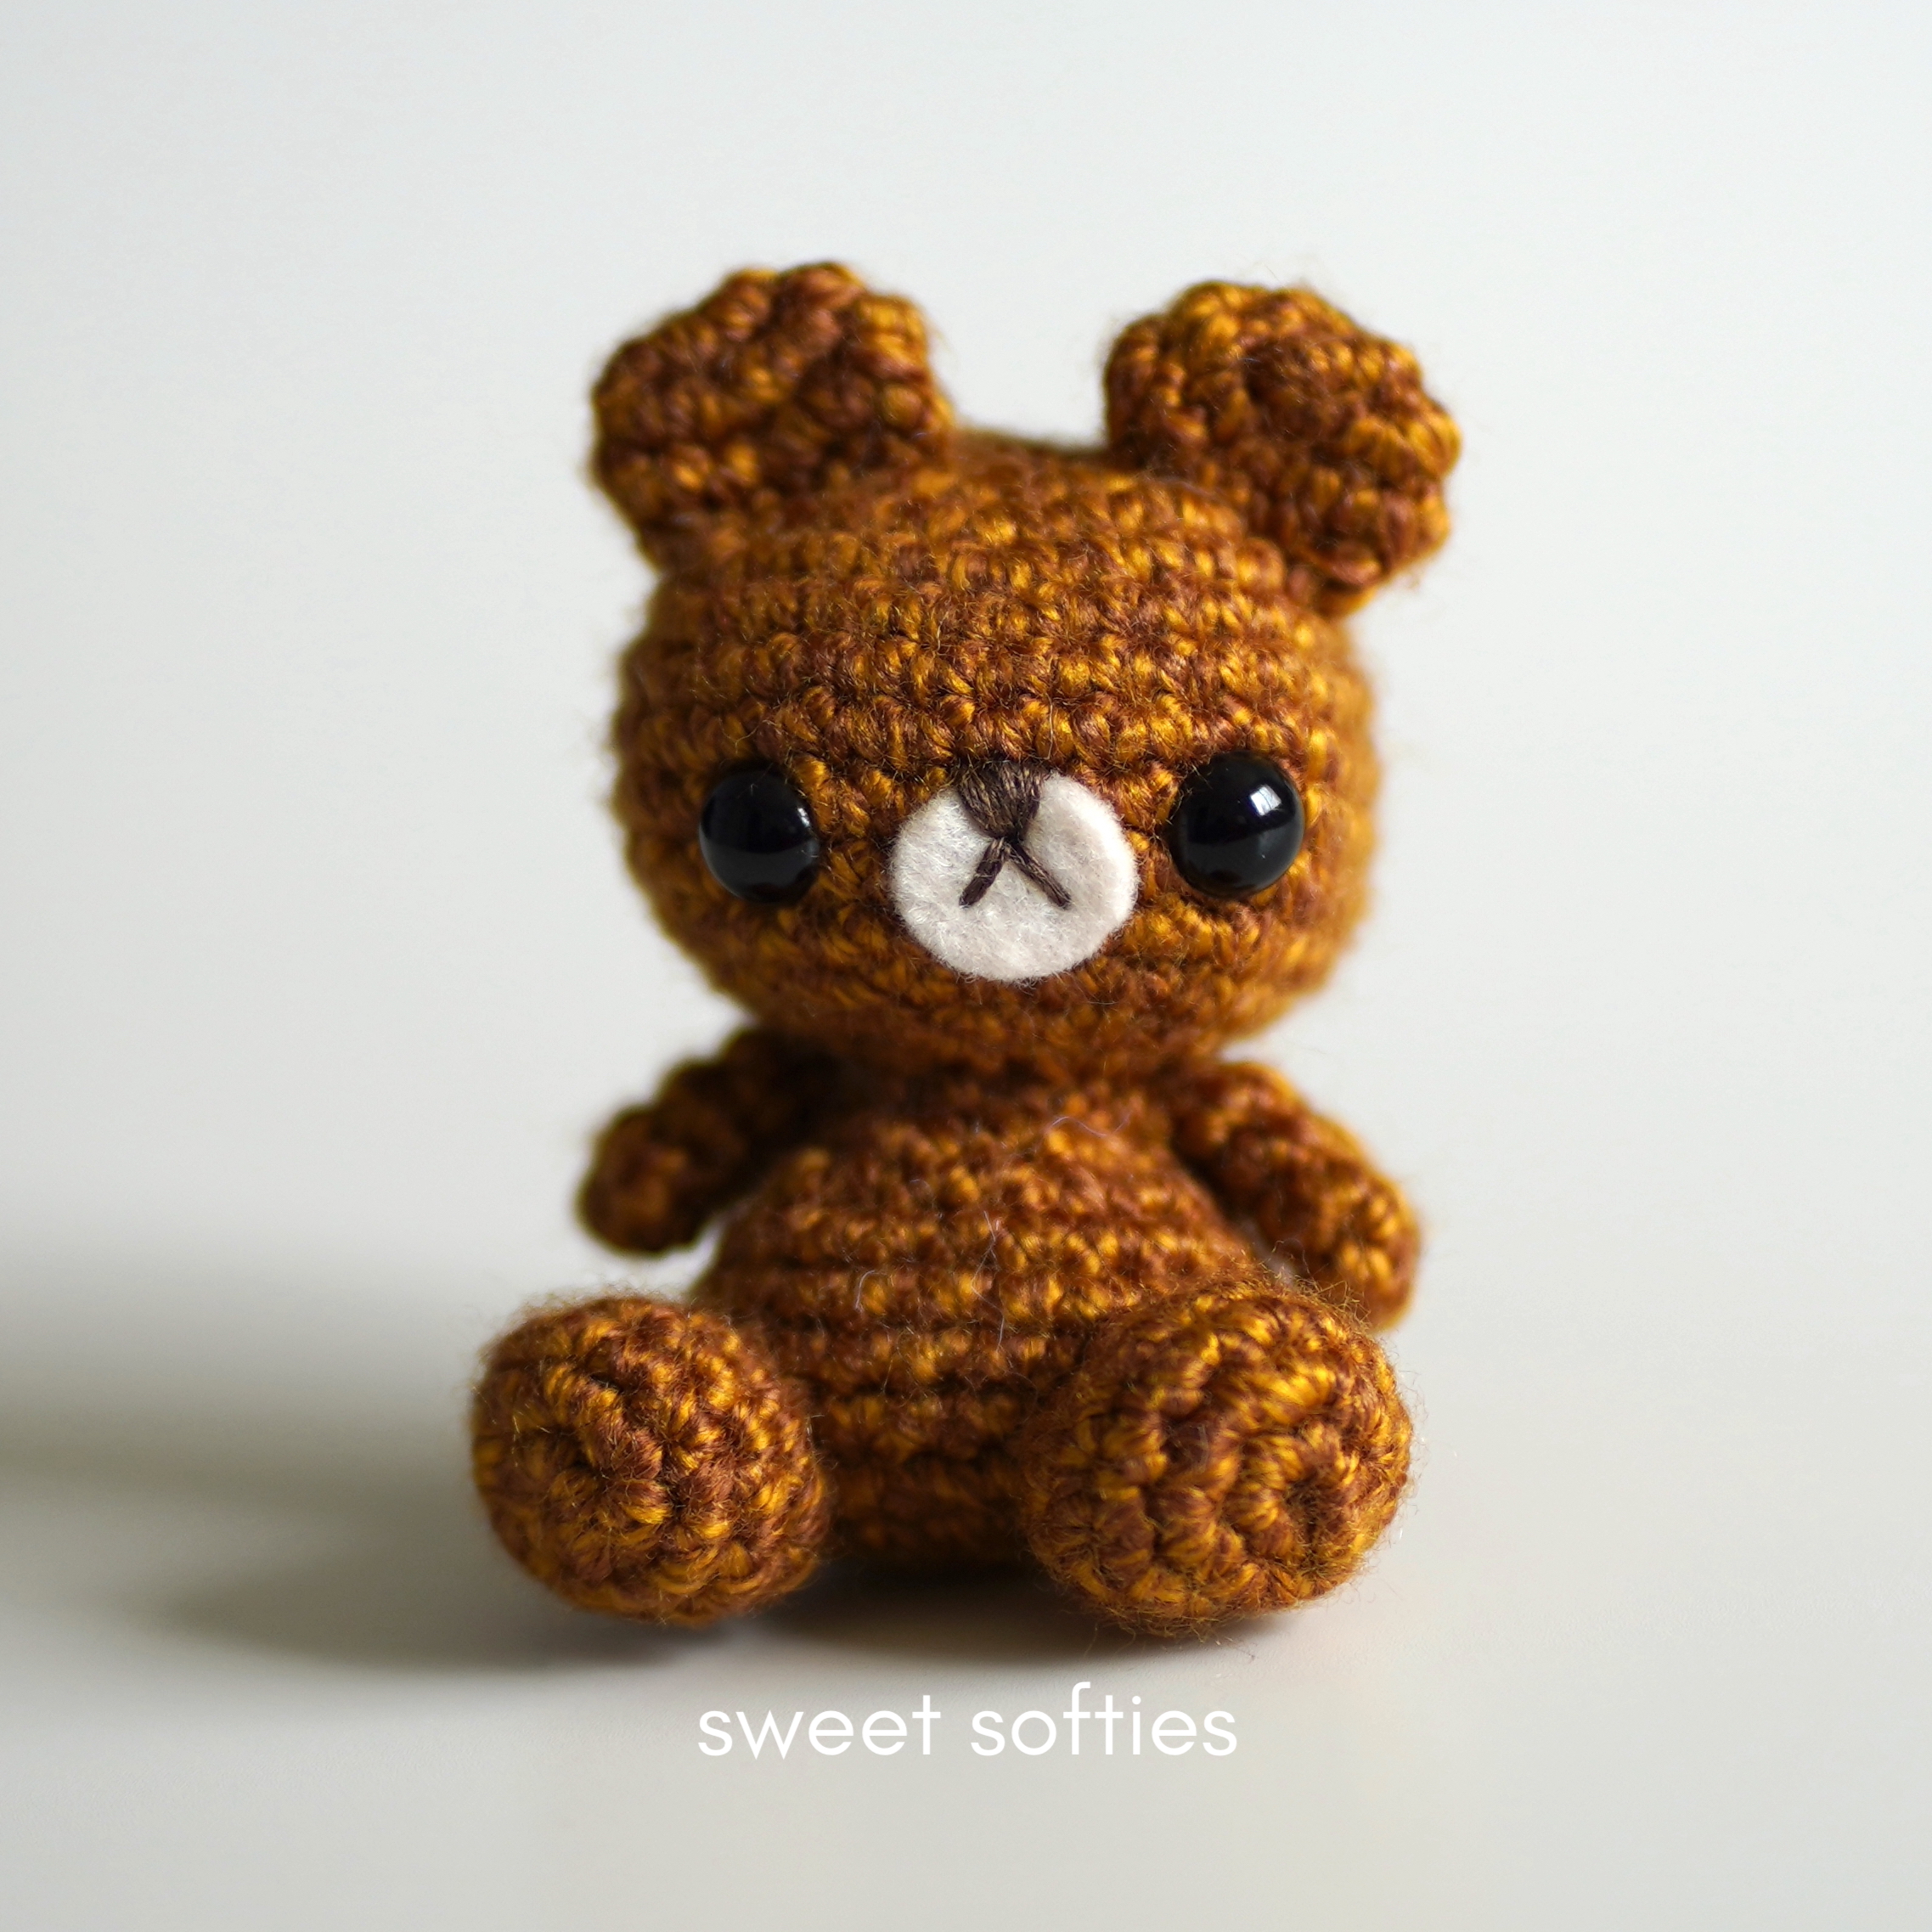 Sewing teddy bear pattern, 17 cm, cute velvet bear